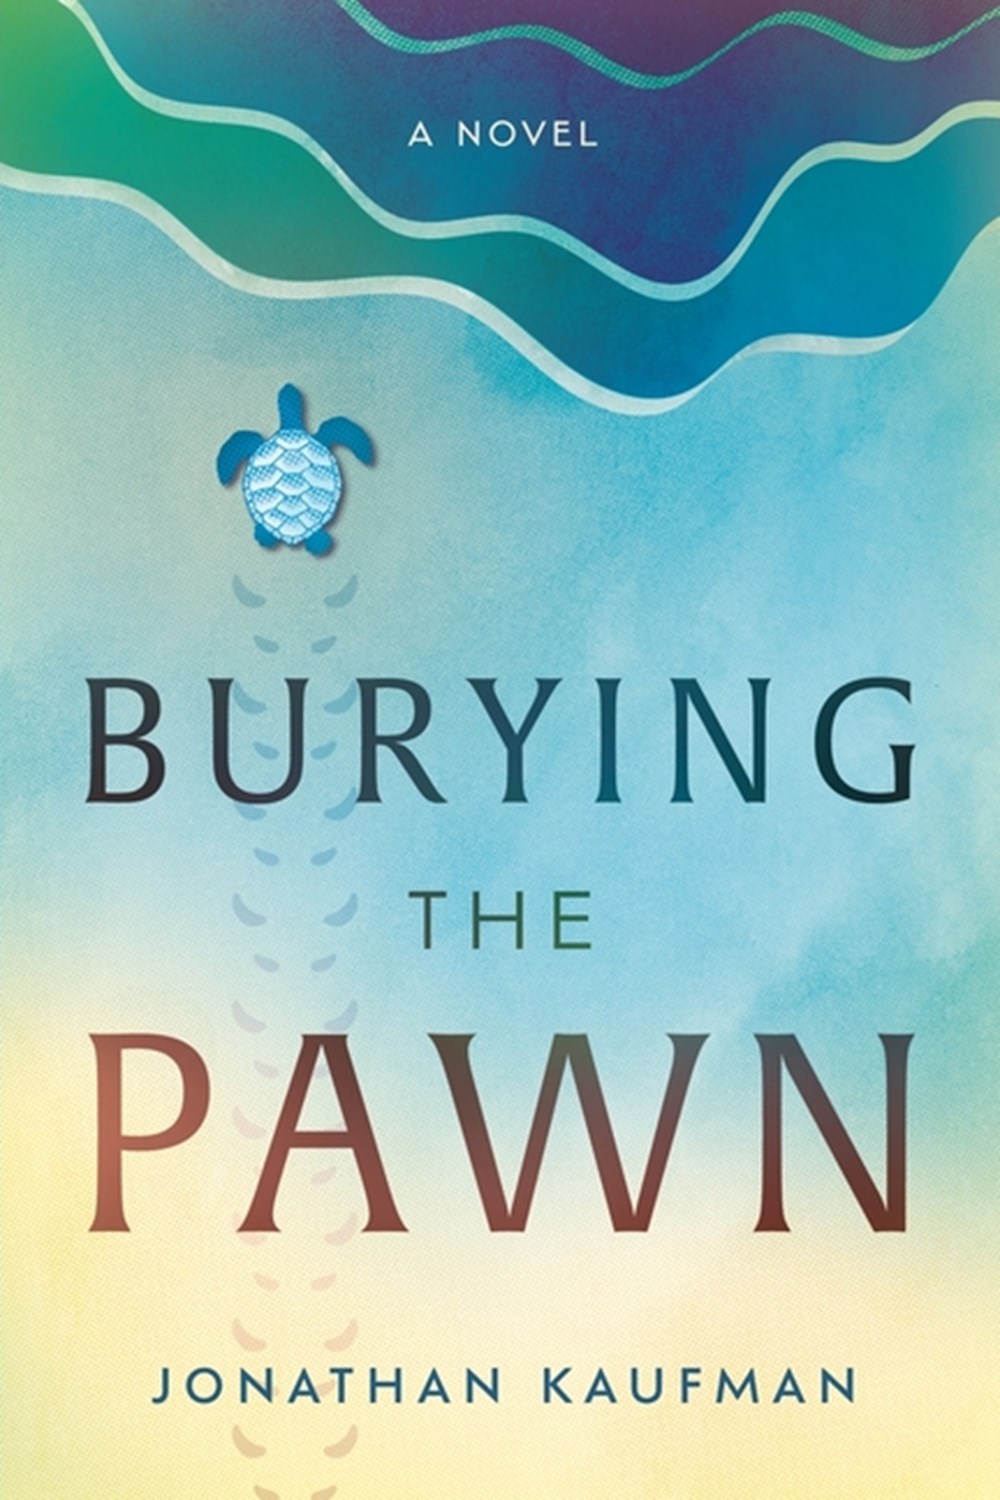 Burying the Pawn